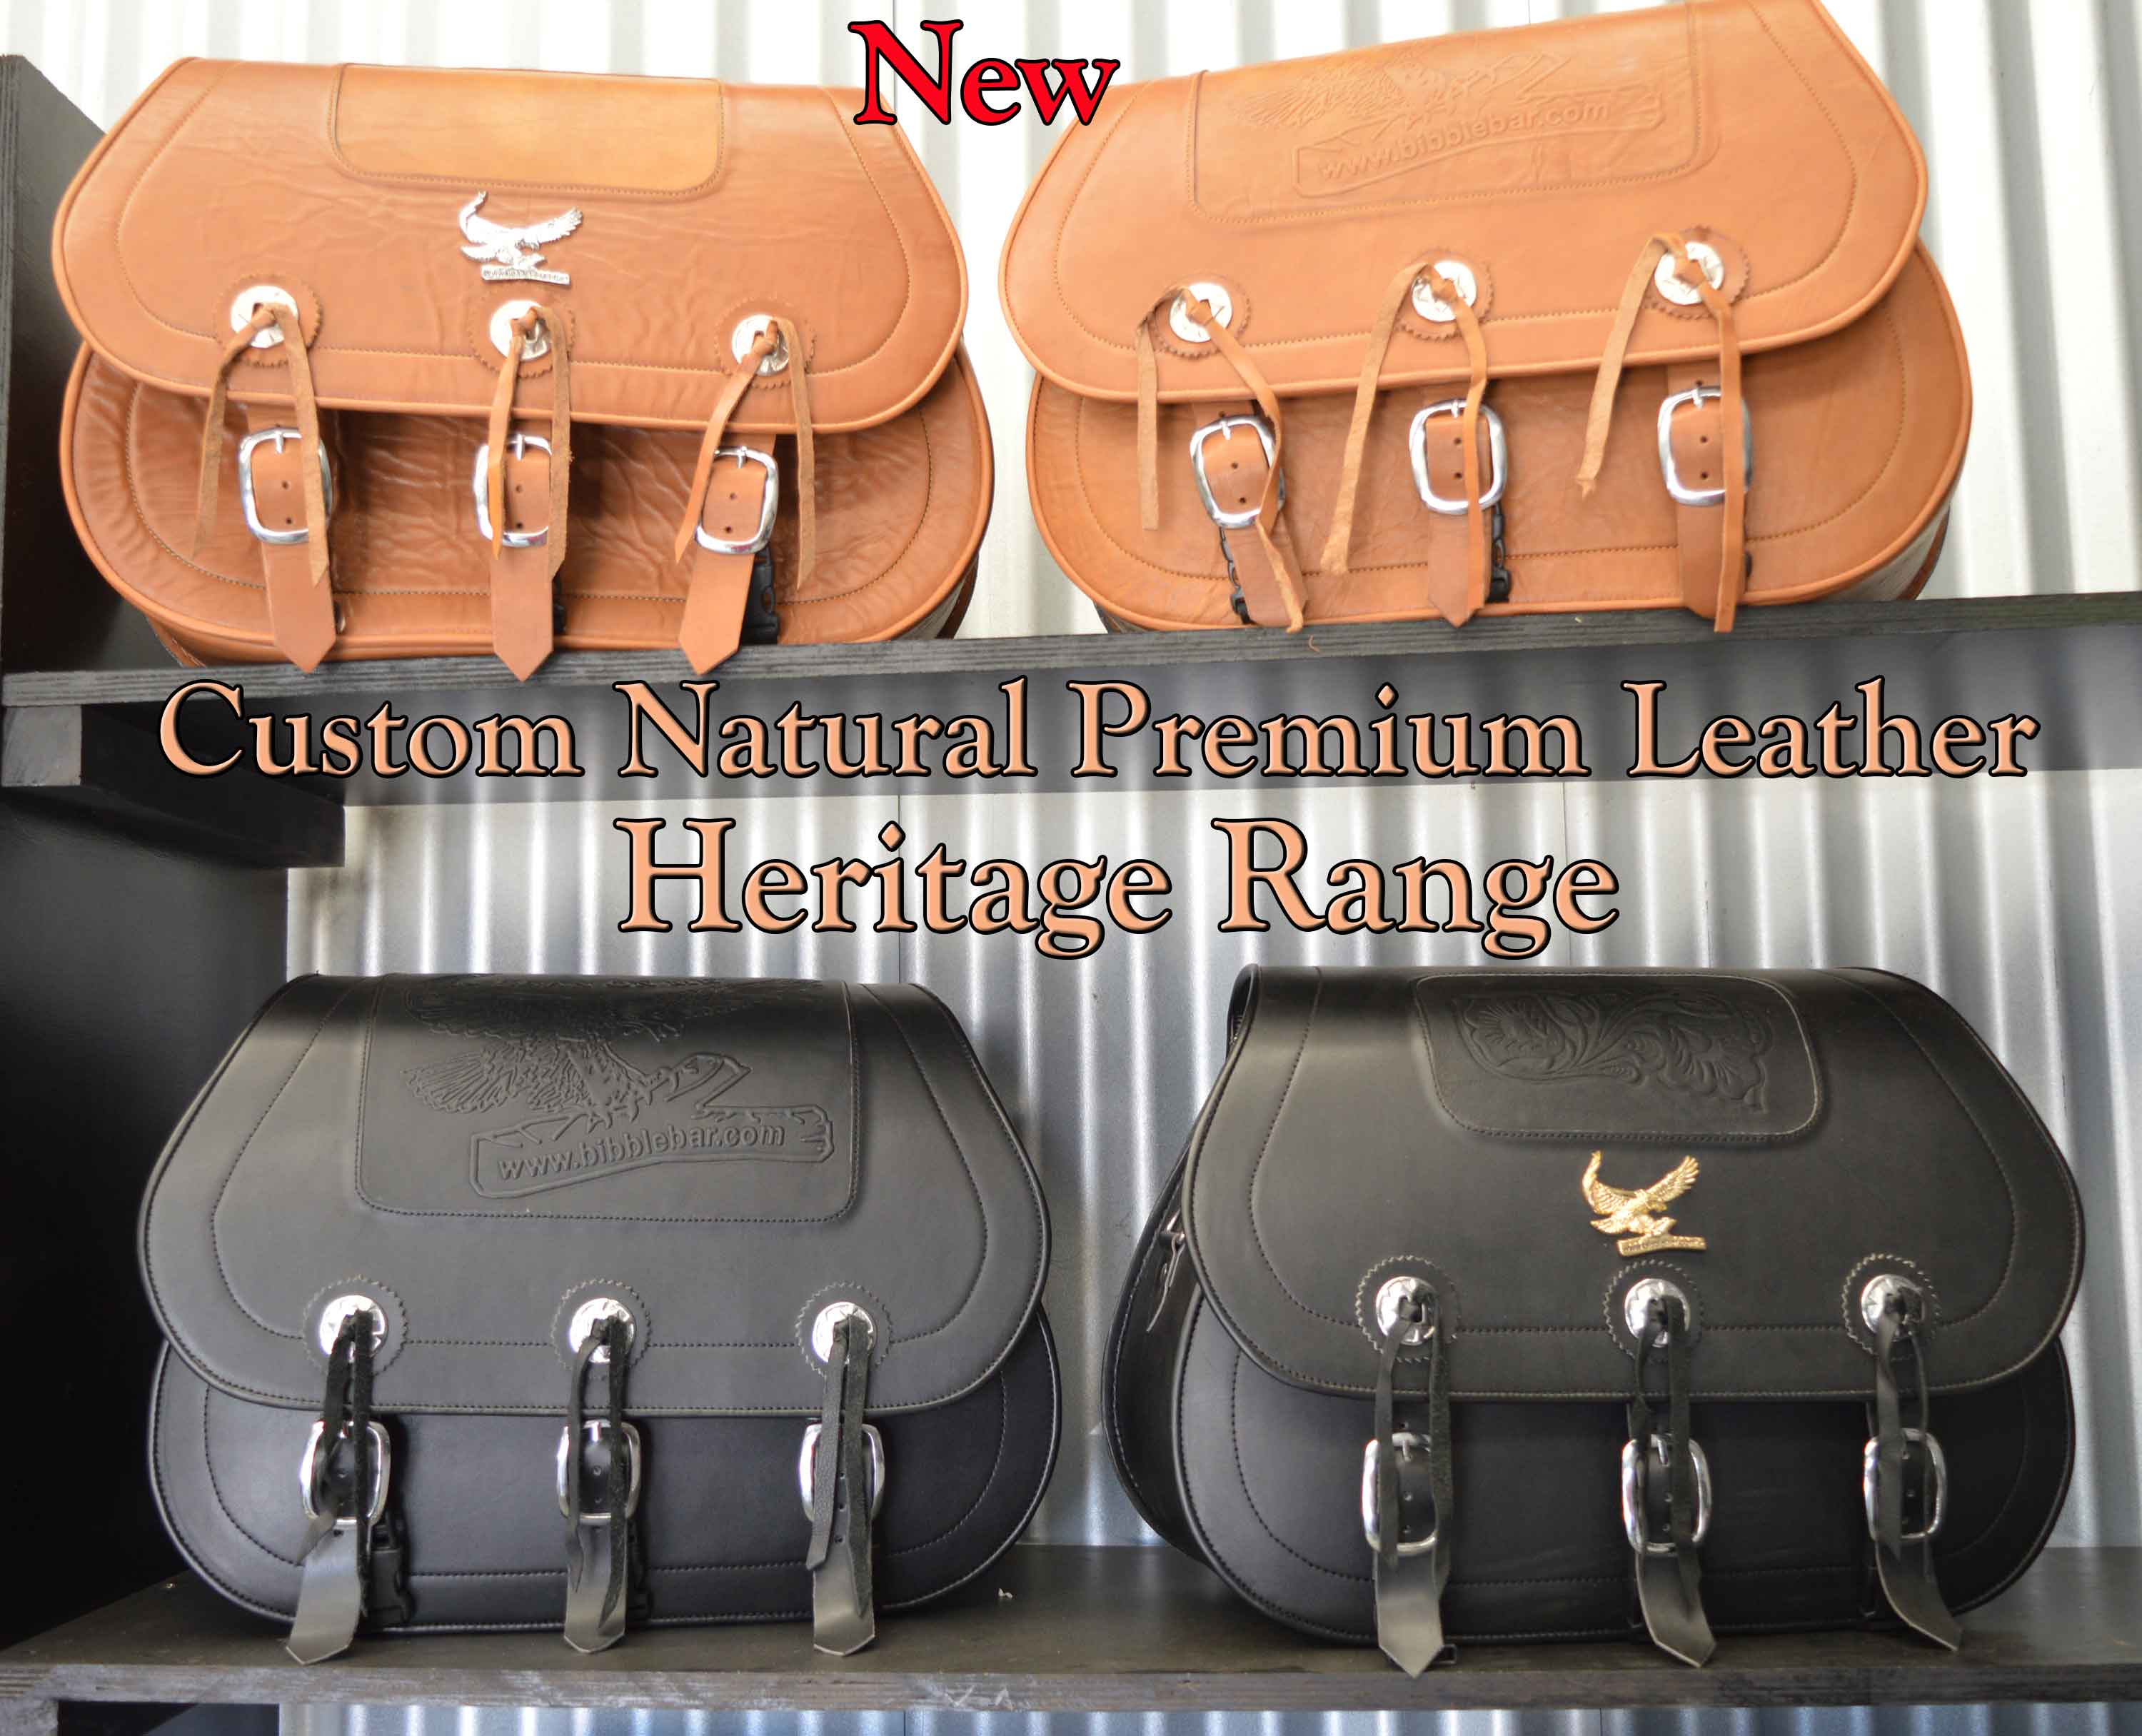 Premium leather saddle bags